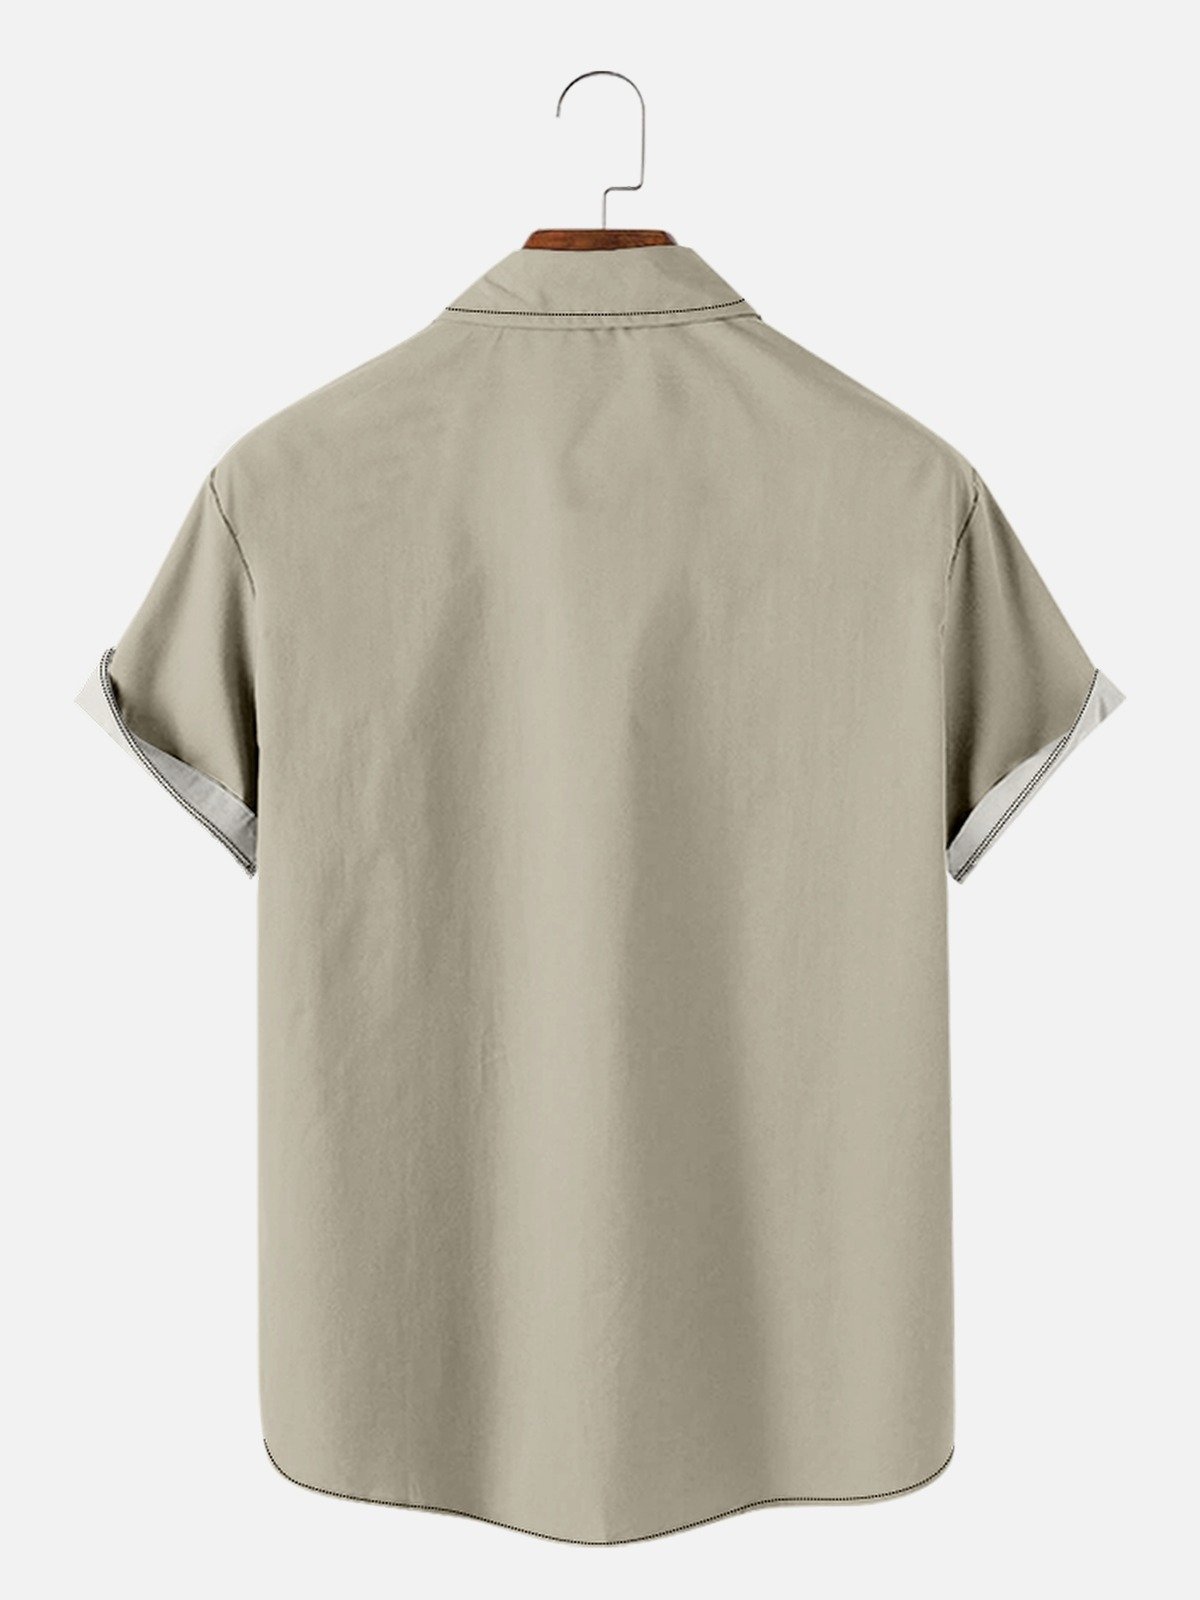 Retro Men’s Camp Hawaii Short Sleeve Shirt